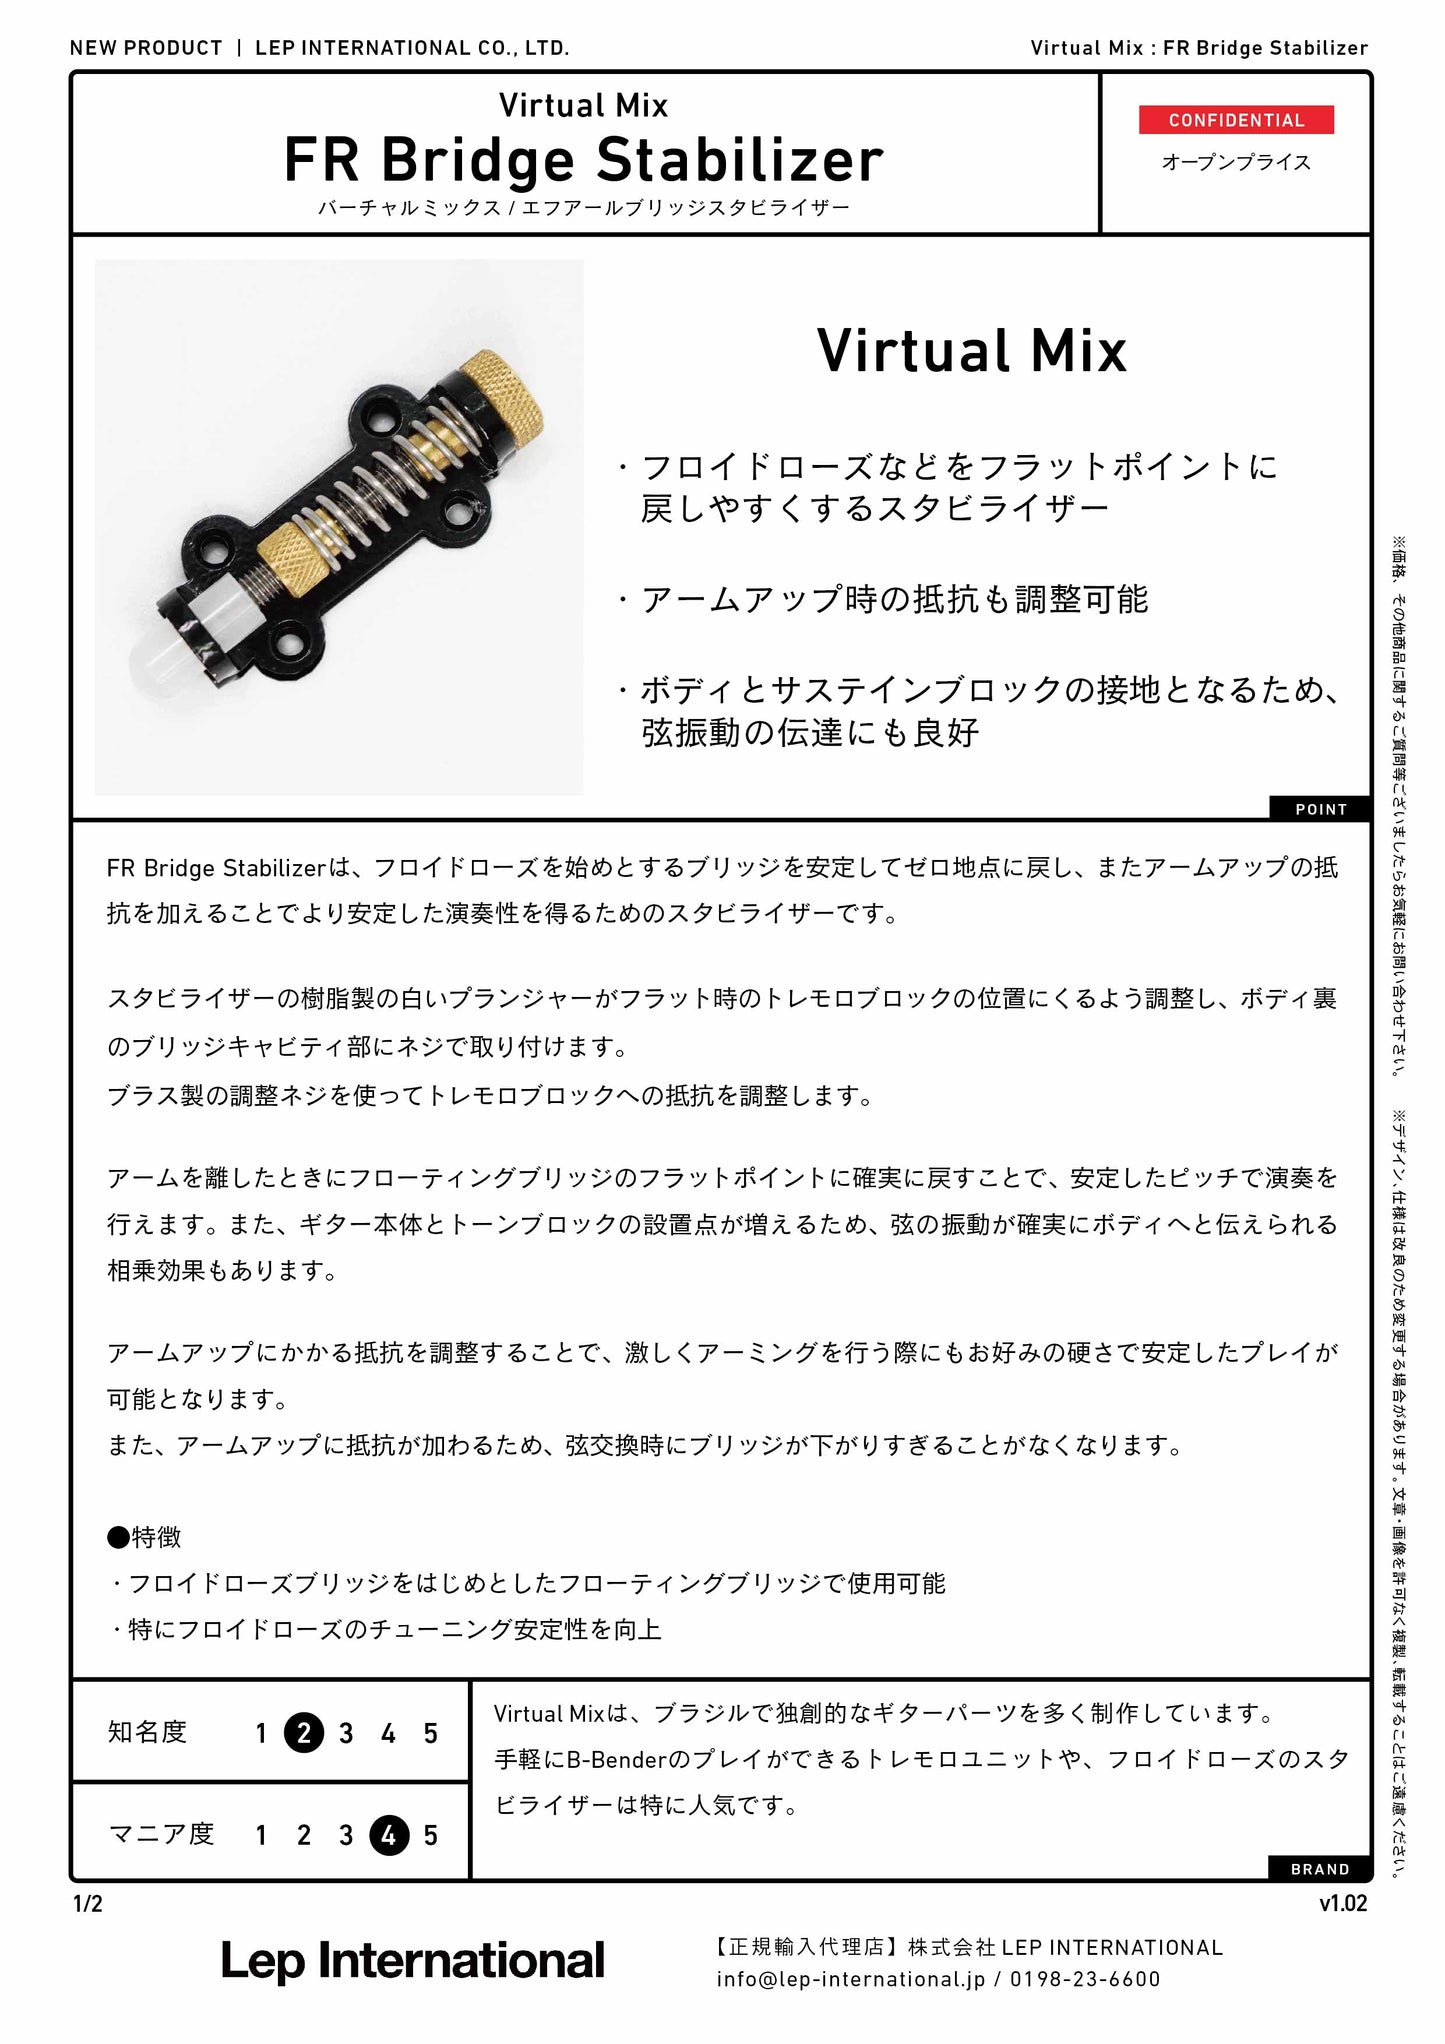 Virtual Mix / FR Bridge Stabilizer